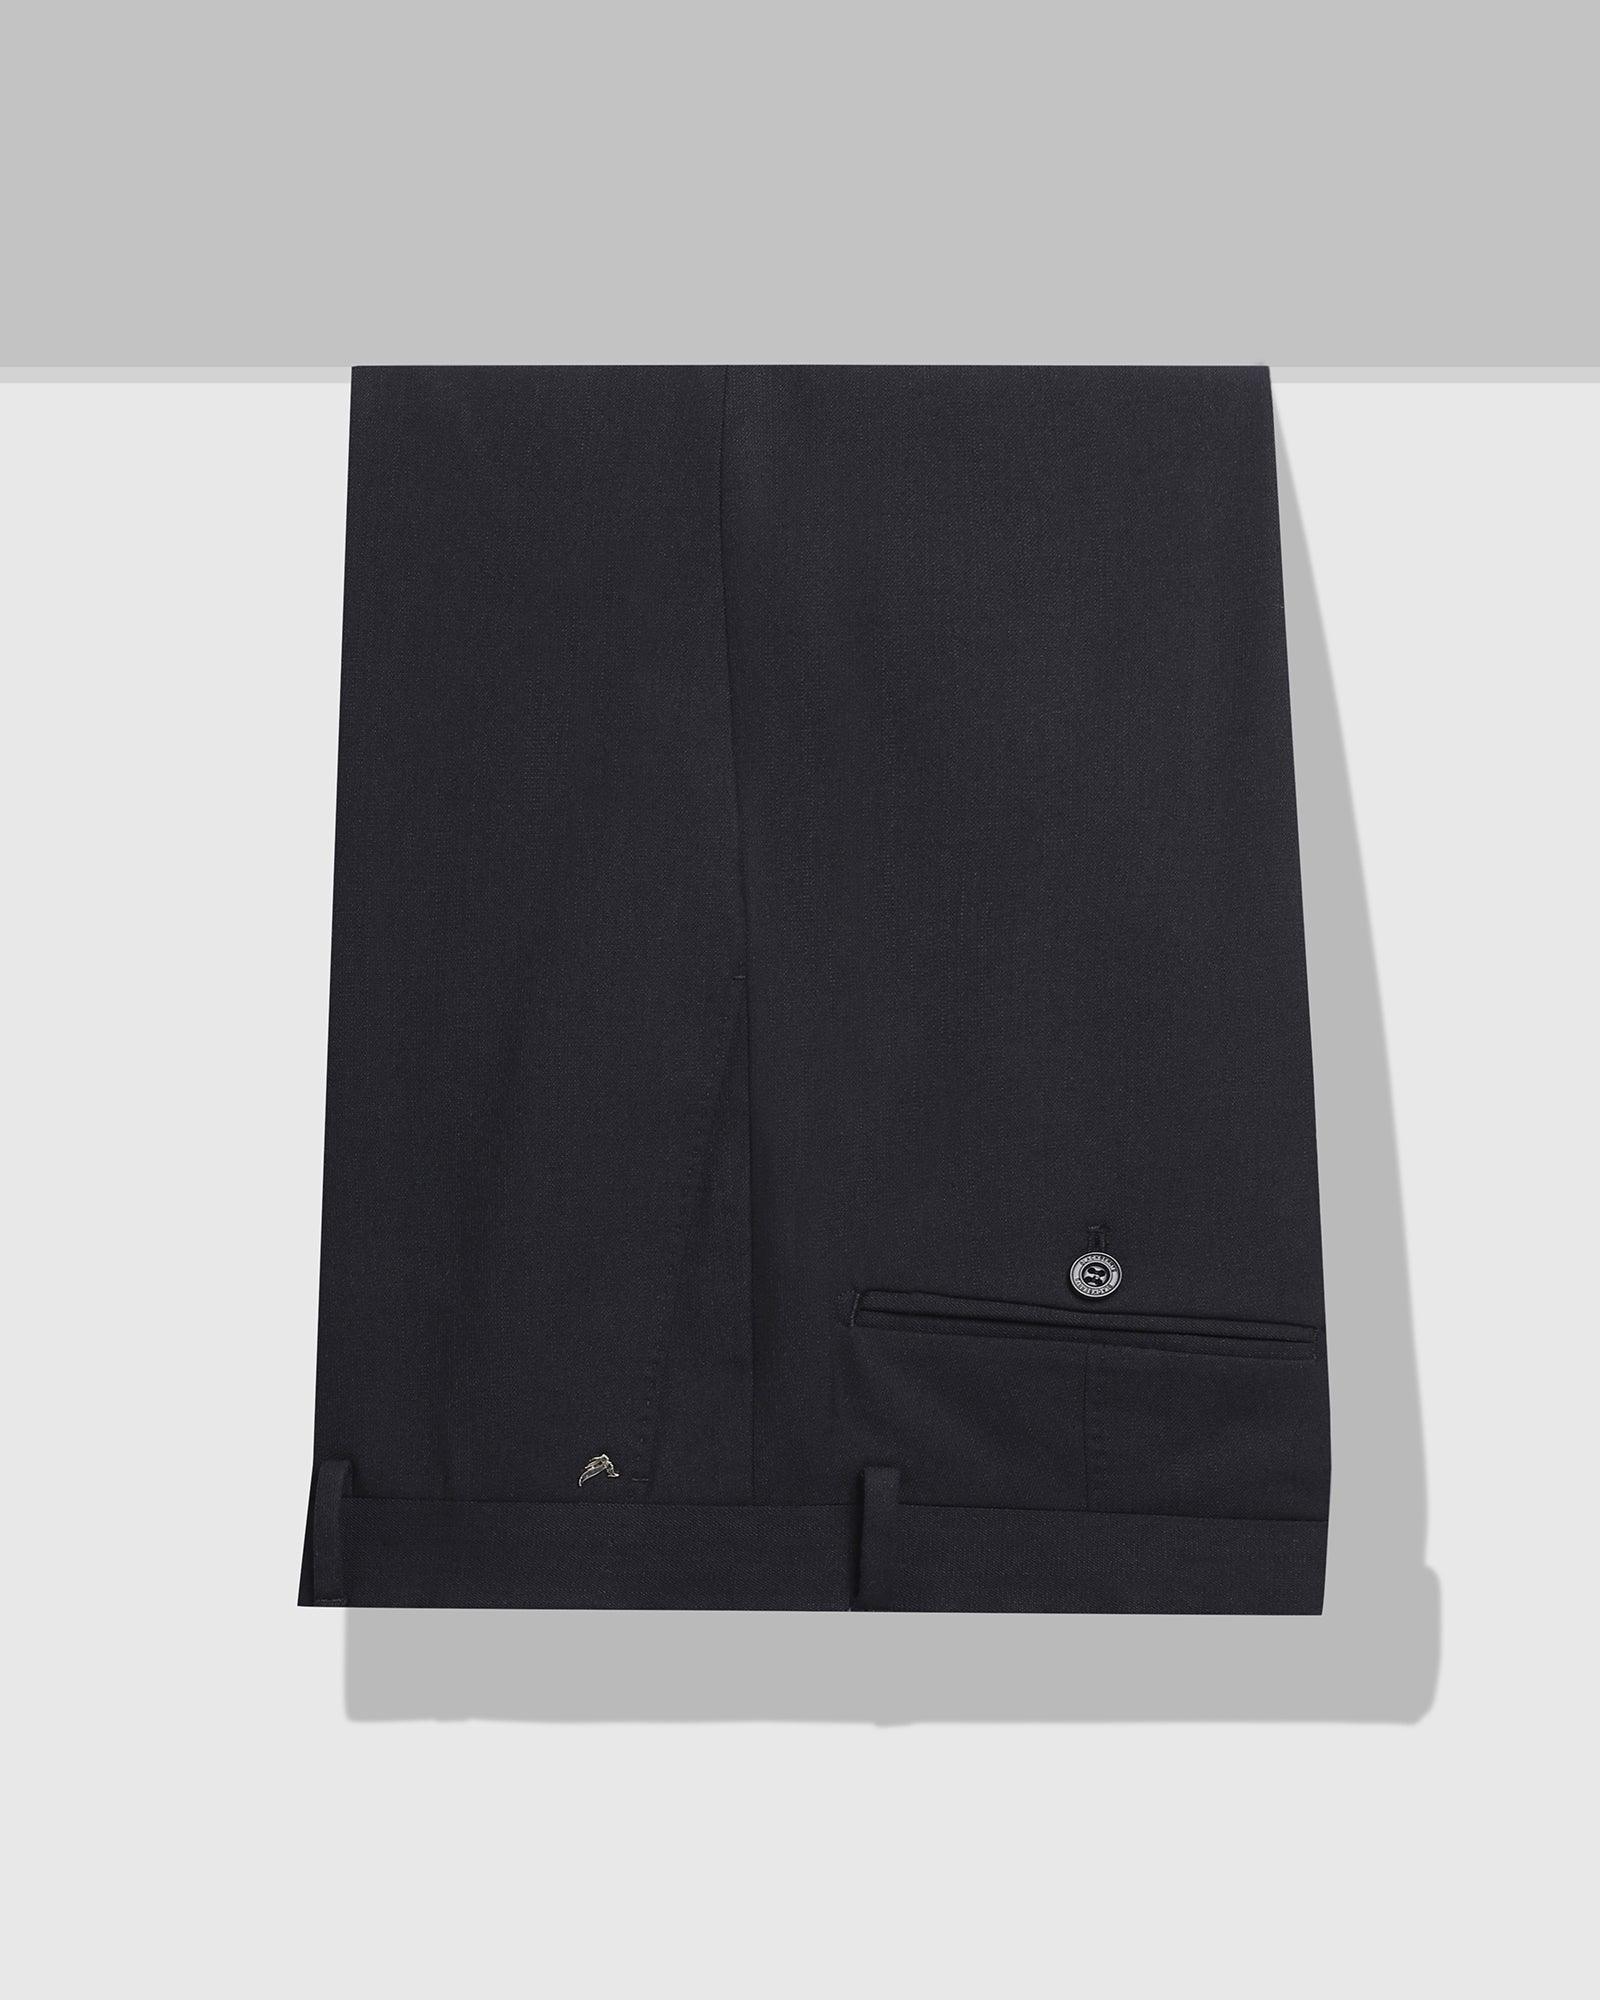 Luxe Slim Comfort B-95 Formal Black Textured Trouser - Term